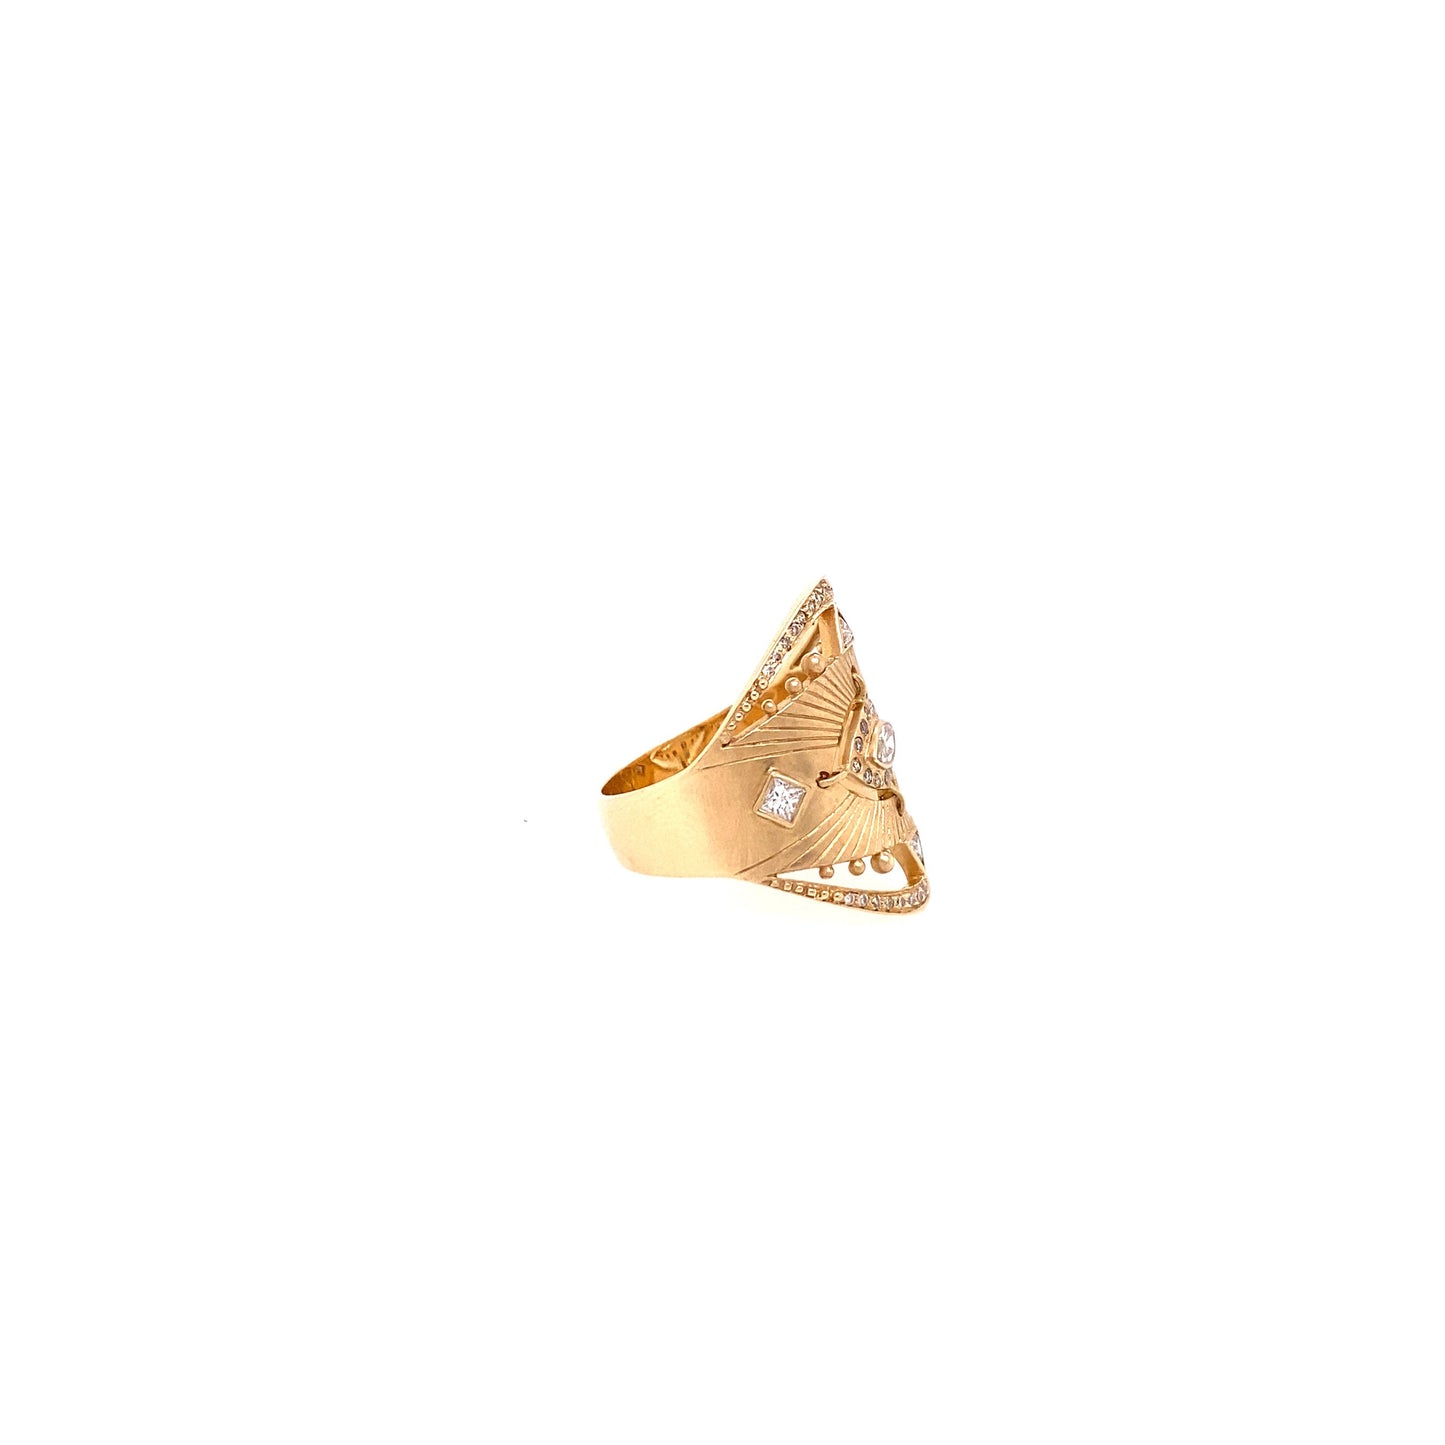 Celine Daoust 14kt Marquis Diamond Eye Talisman Ring